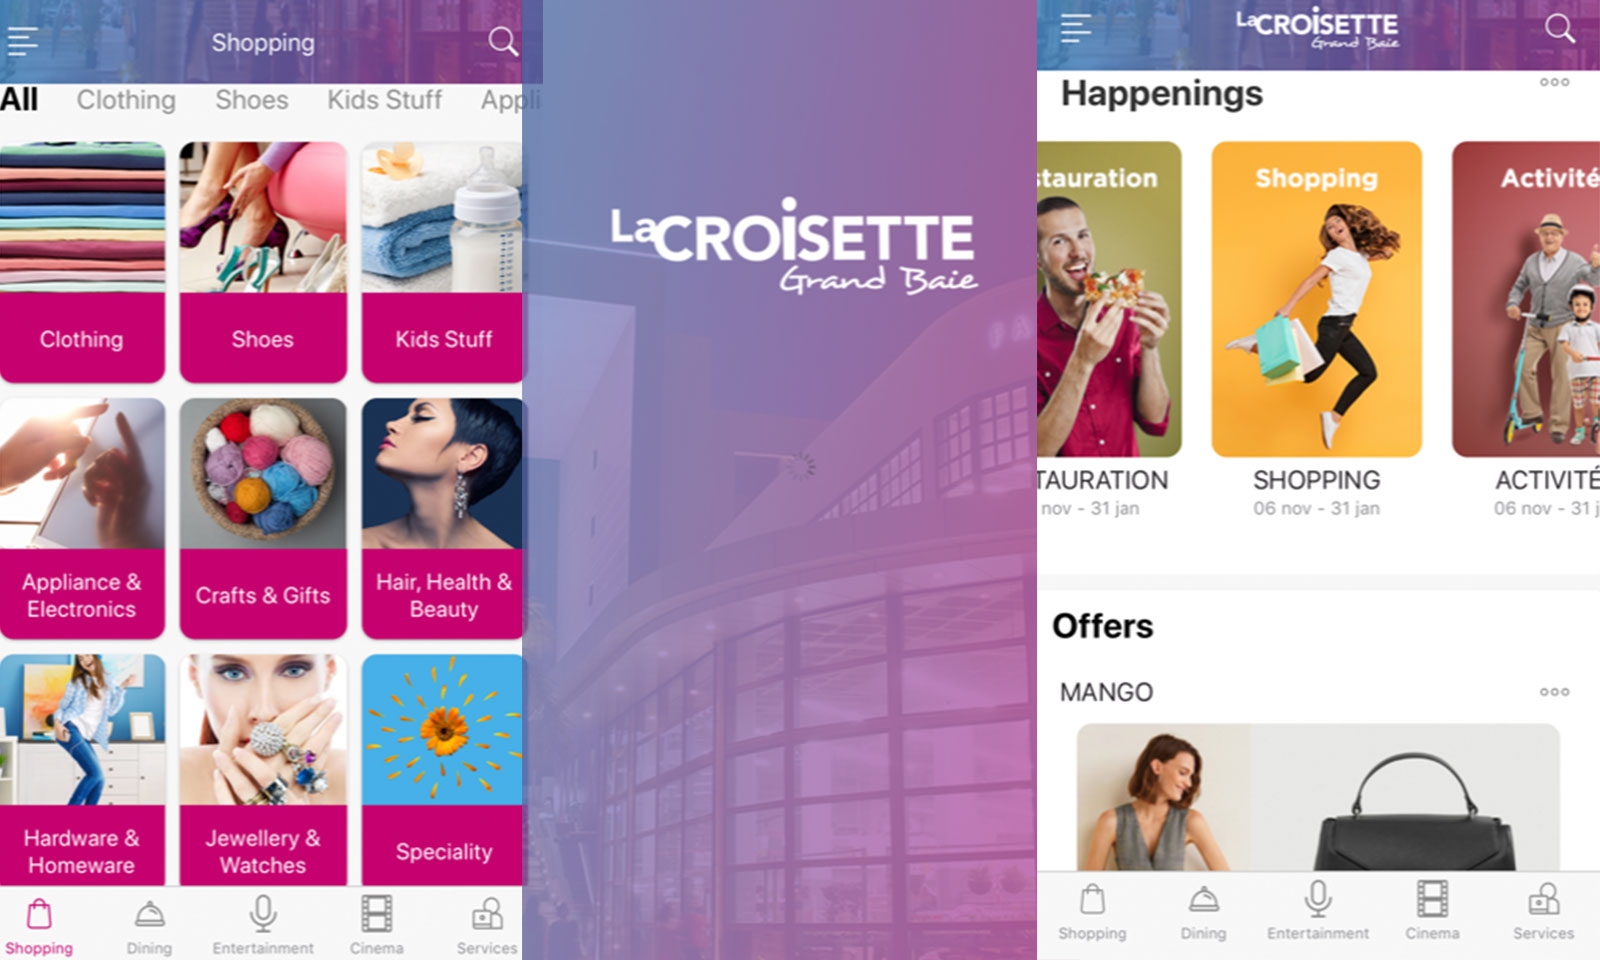 Grand Baie La Croisette : the ergonomic mobile application